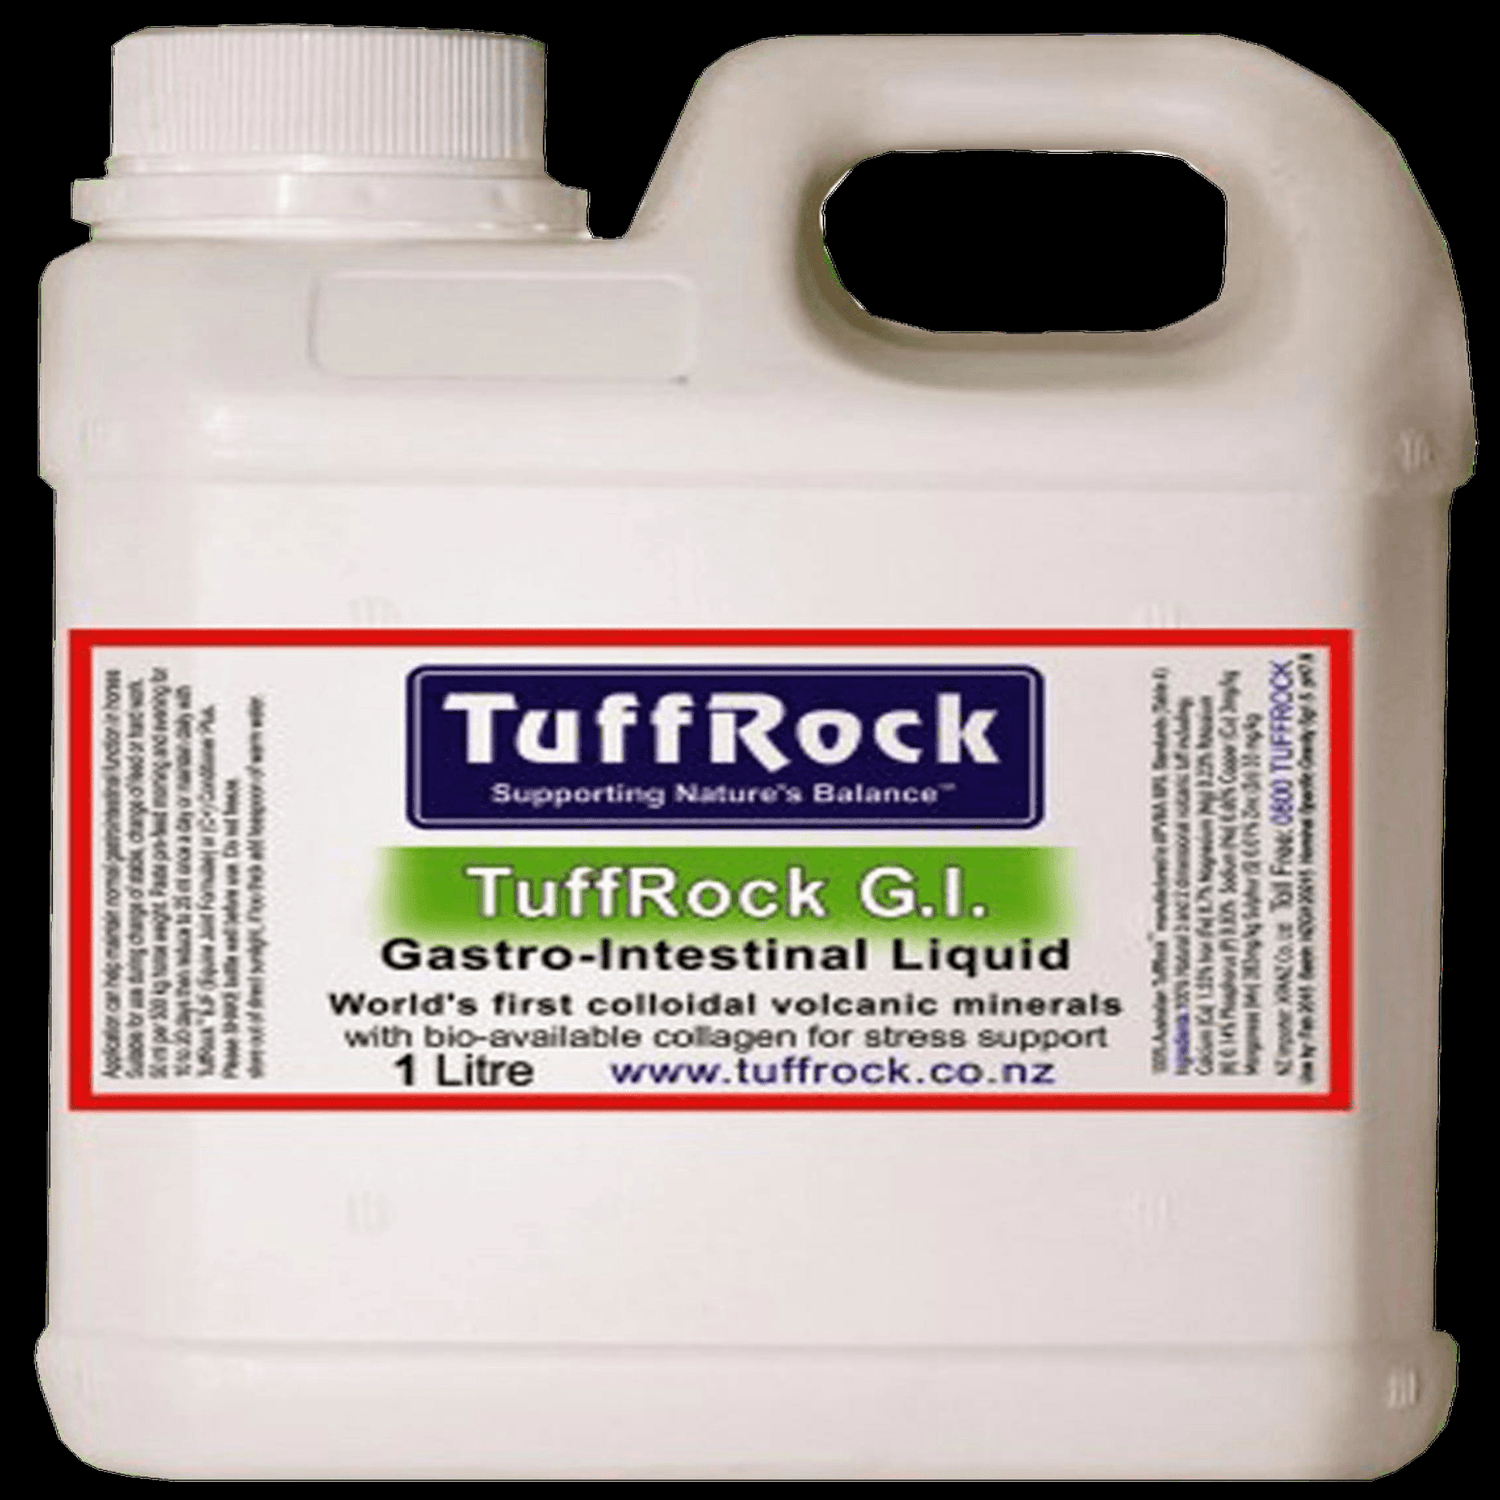 Tuffrock GI (Gastro-Intestinal) Liquid